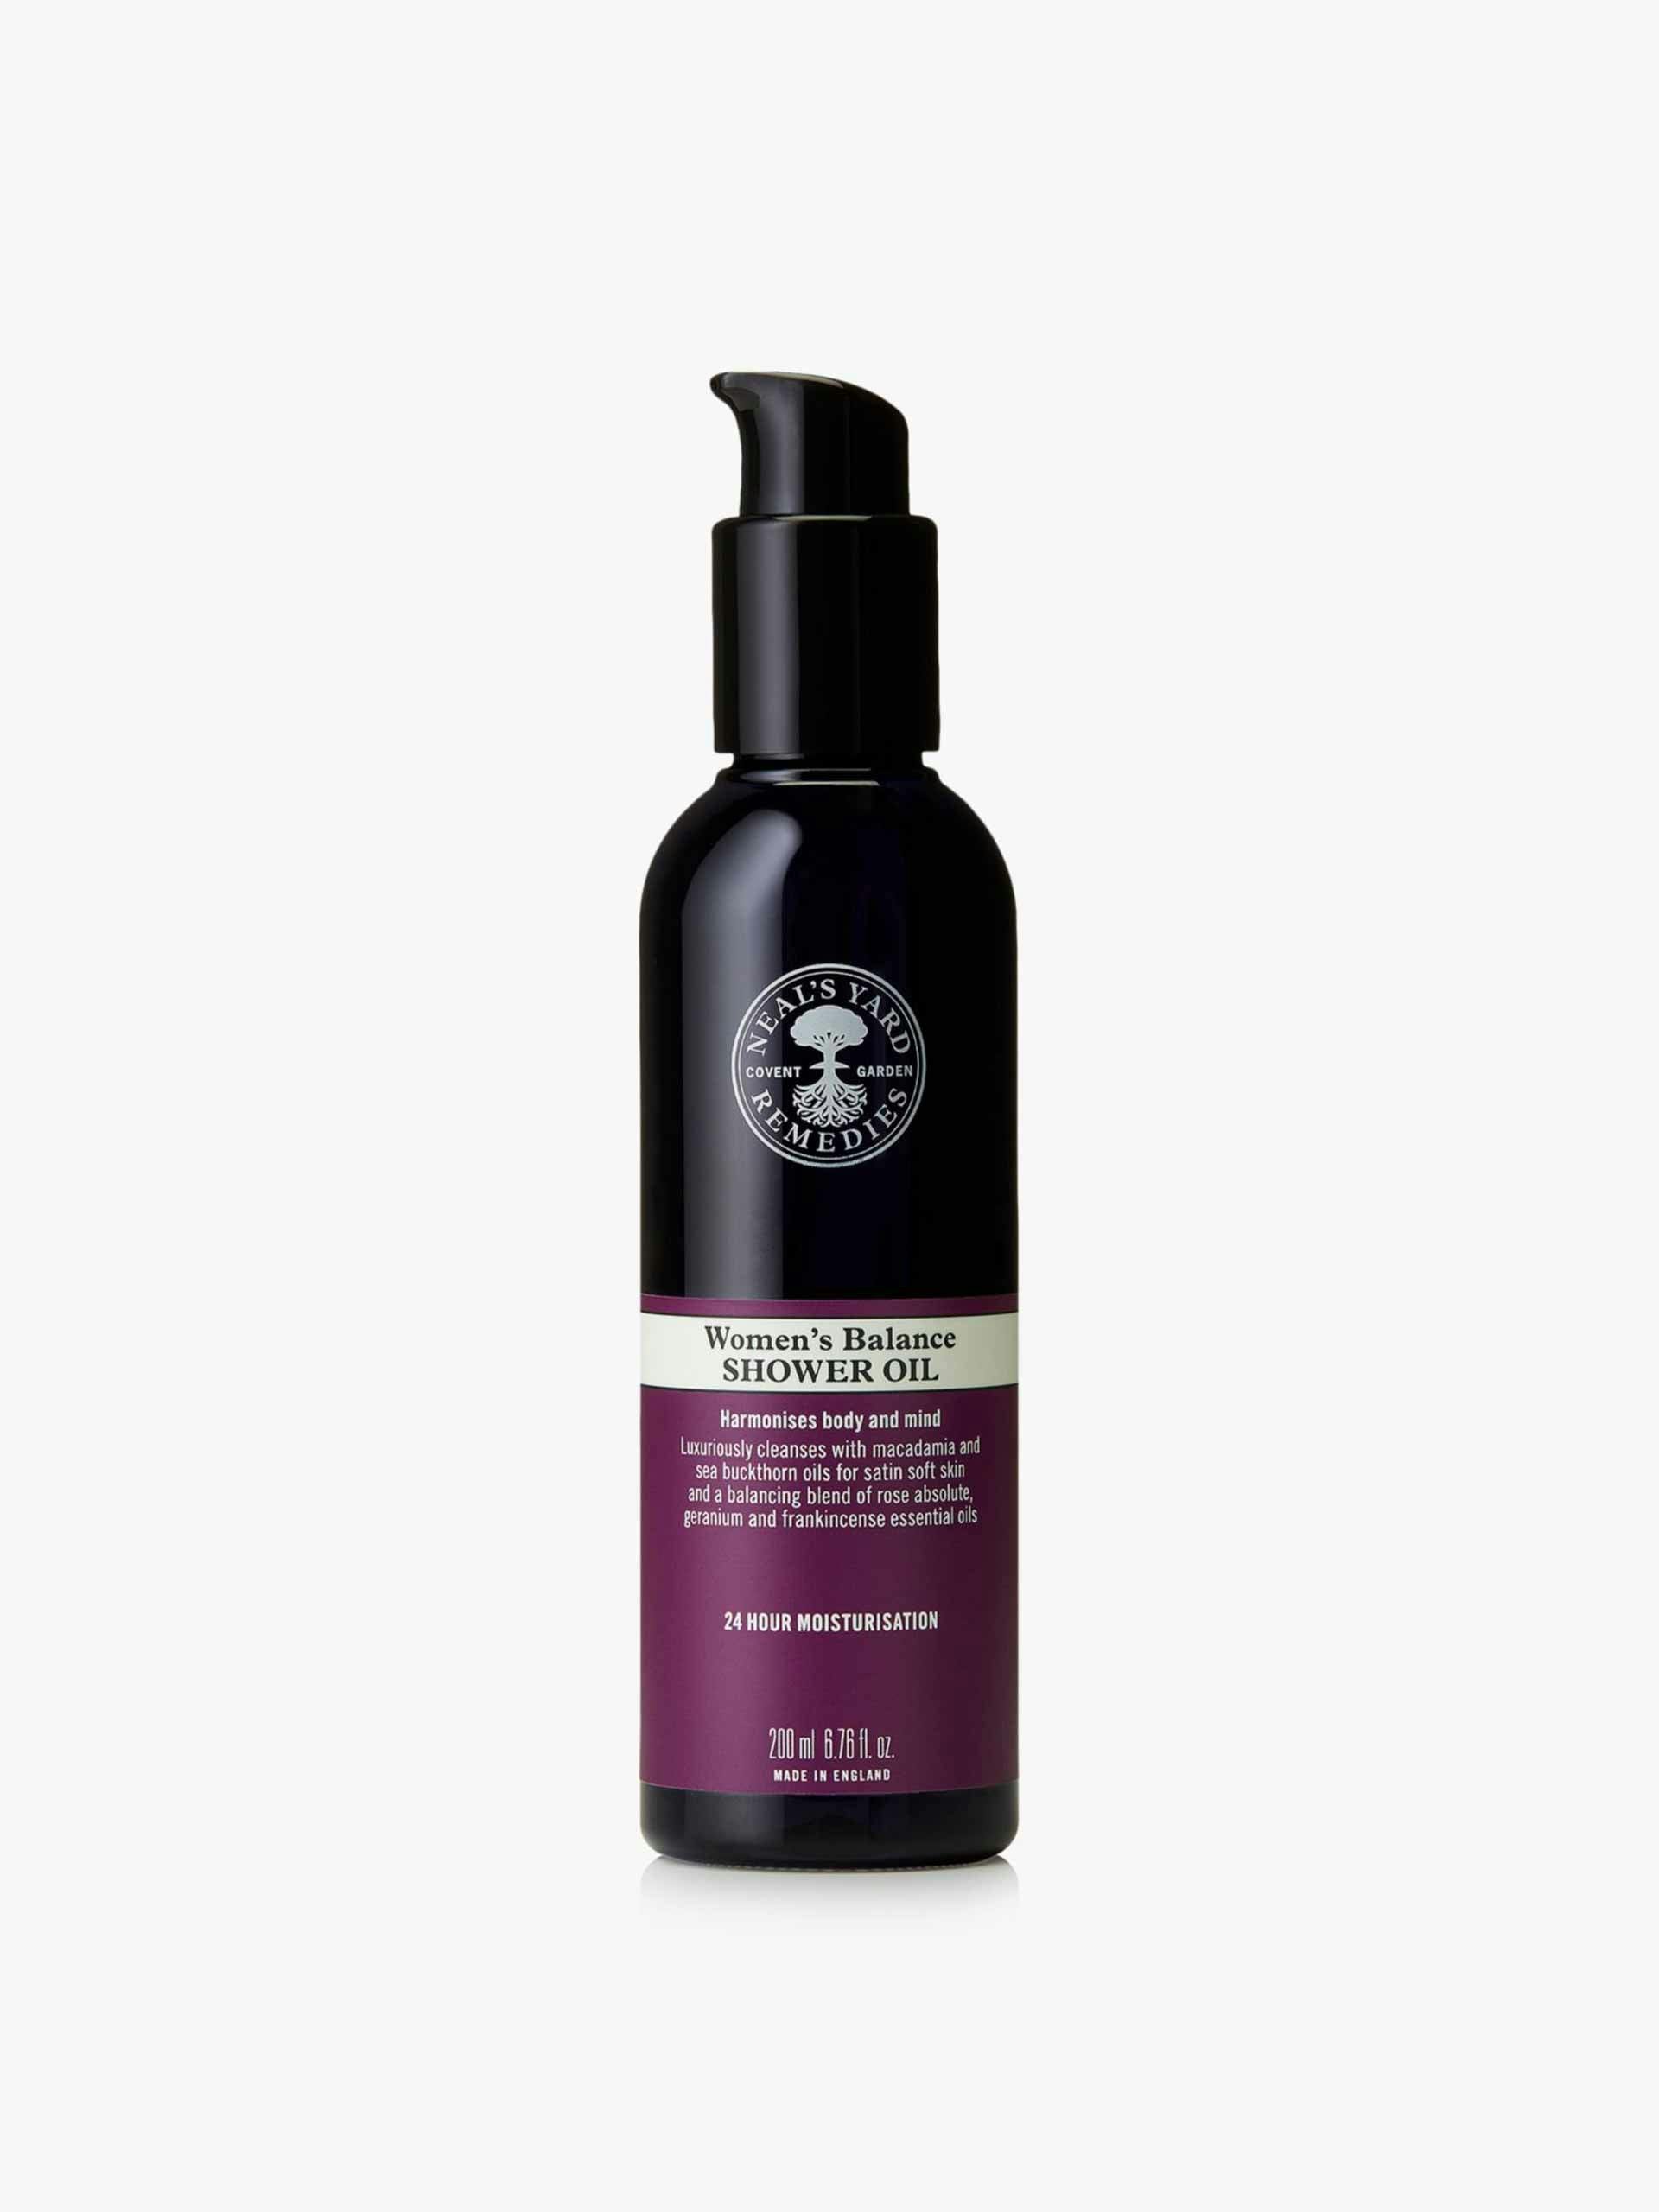 Aromatherapeutic shower oil